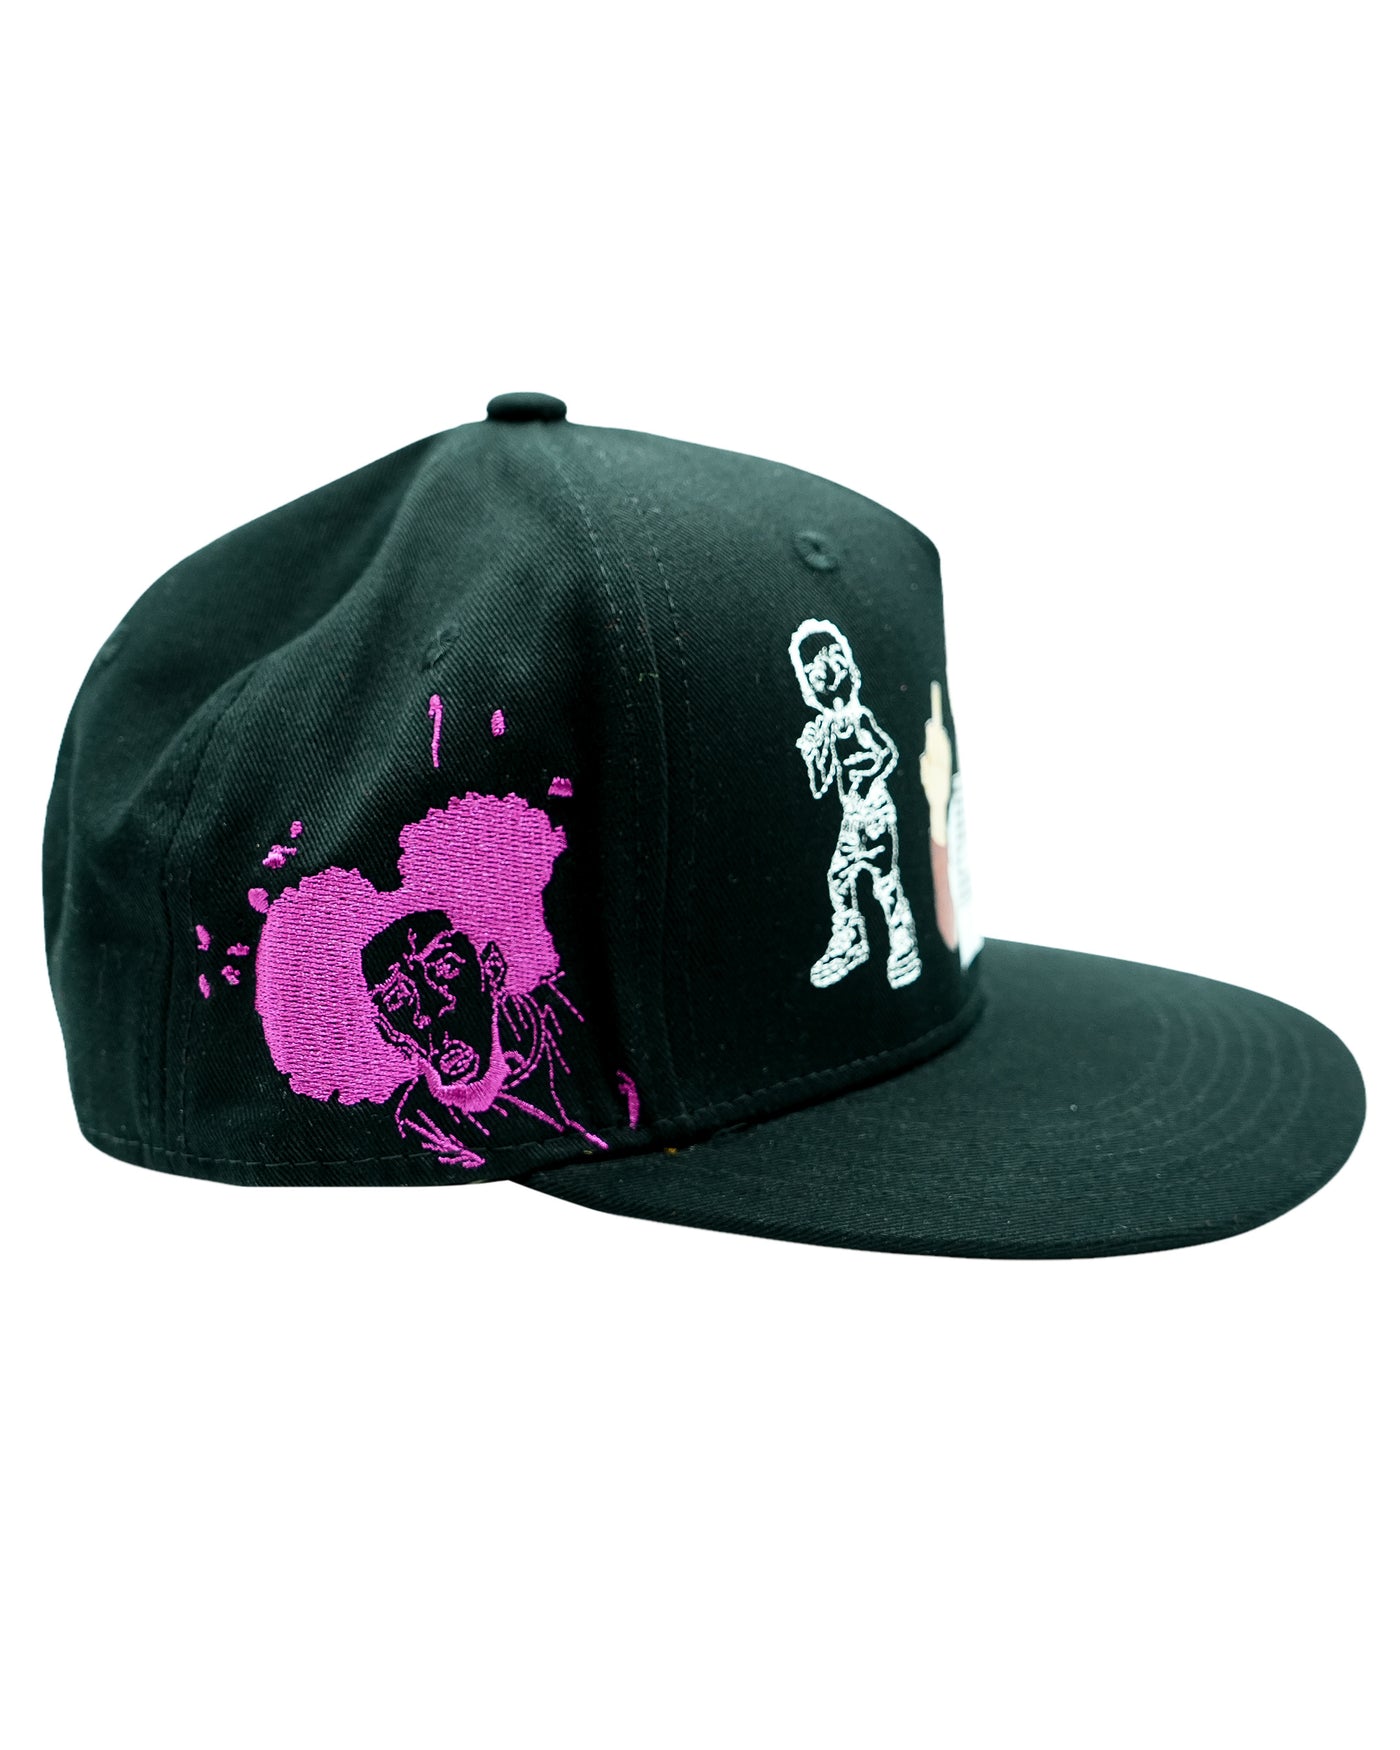 The Boondocks Riley Mugshot Black Snapback Hat